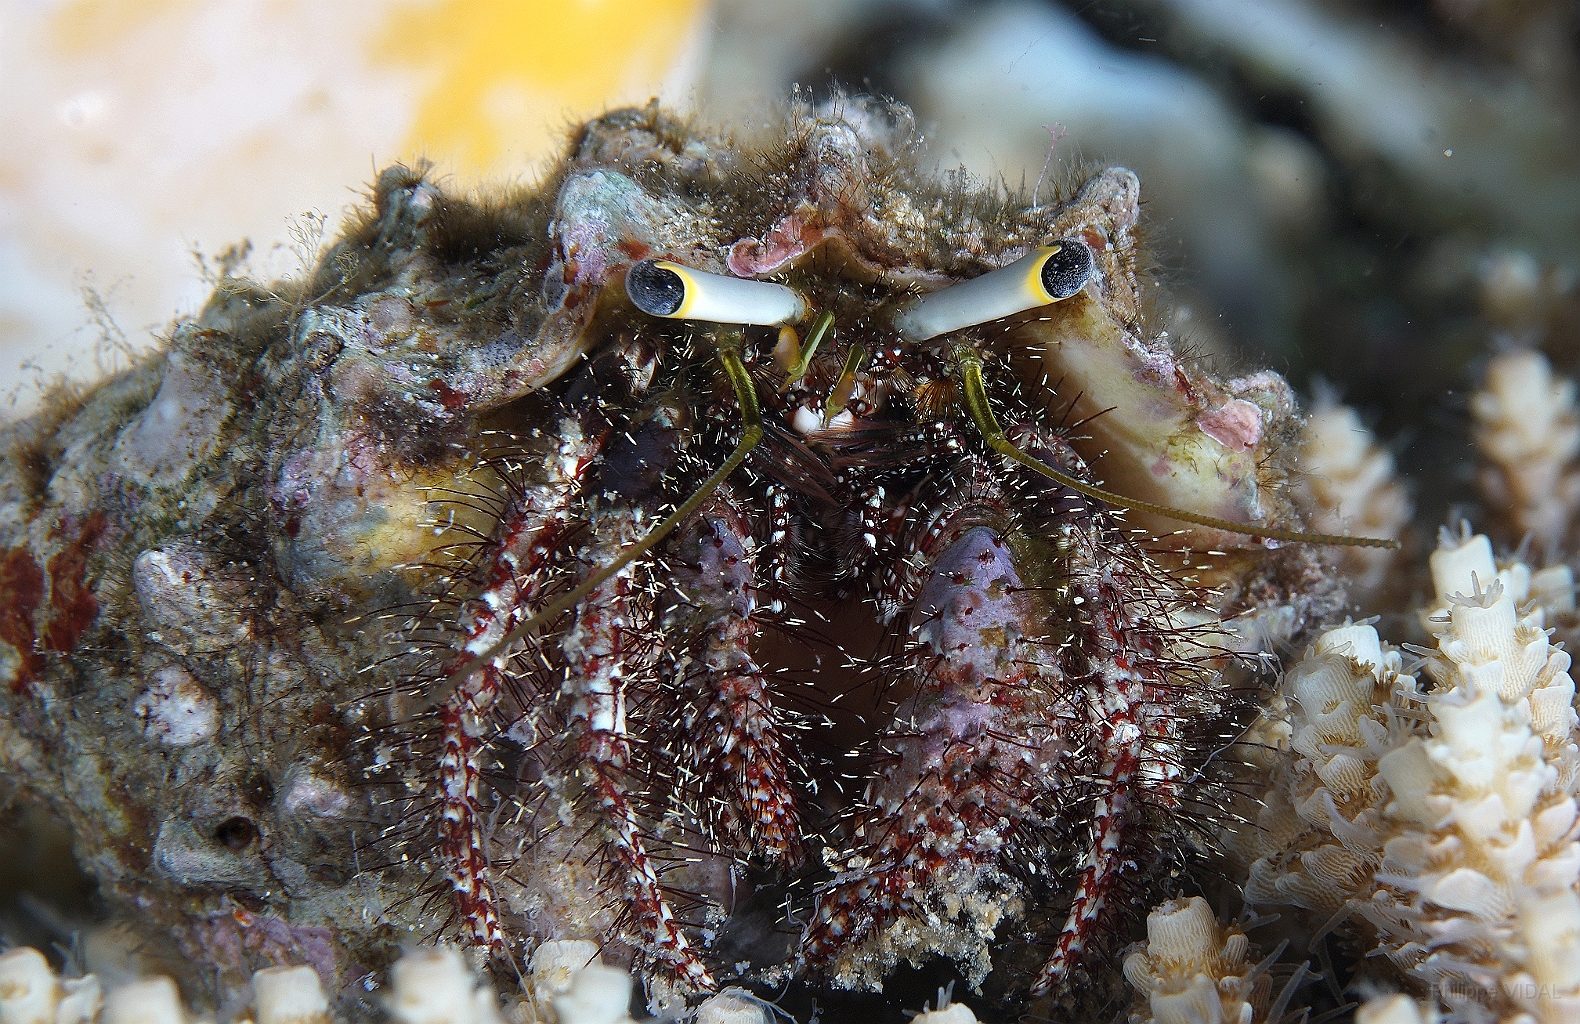 Banda Sea 2018 - DSC05928_rc - Dark knee hermit crab - Bernard lermite des recifs - Dardanus logopodes.jpg